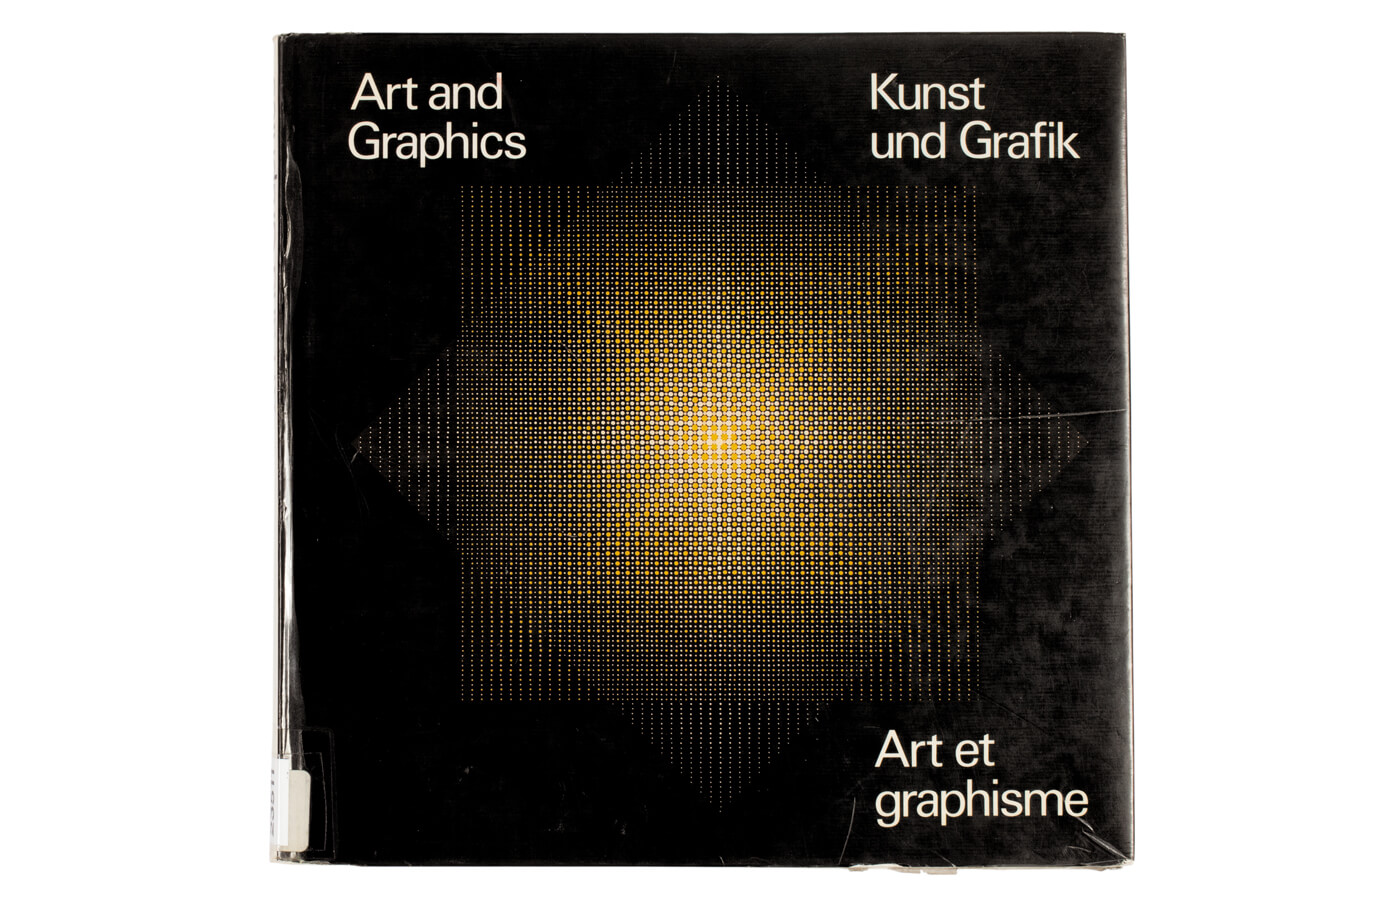 Art and Graphics | Kunst und Grafik | Art et graphisme